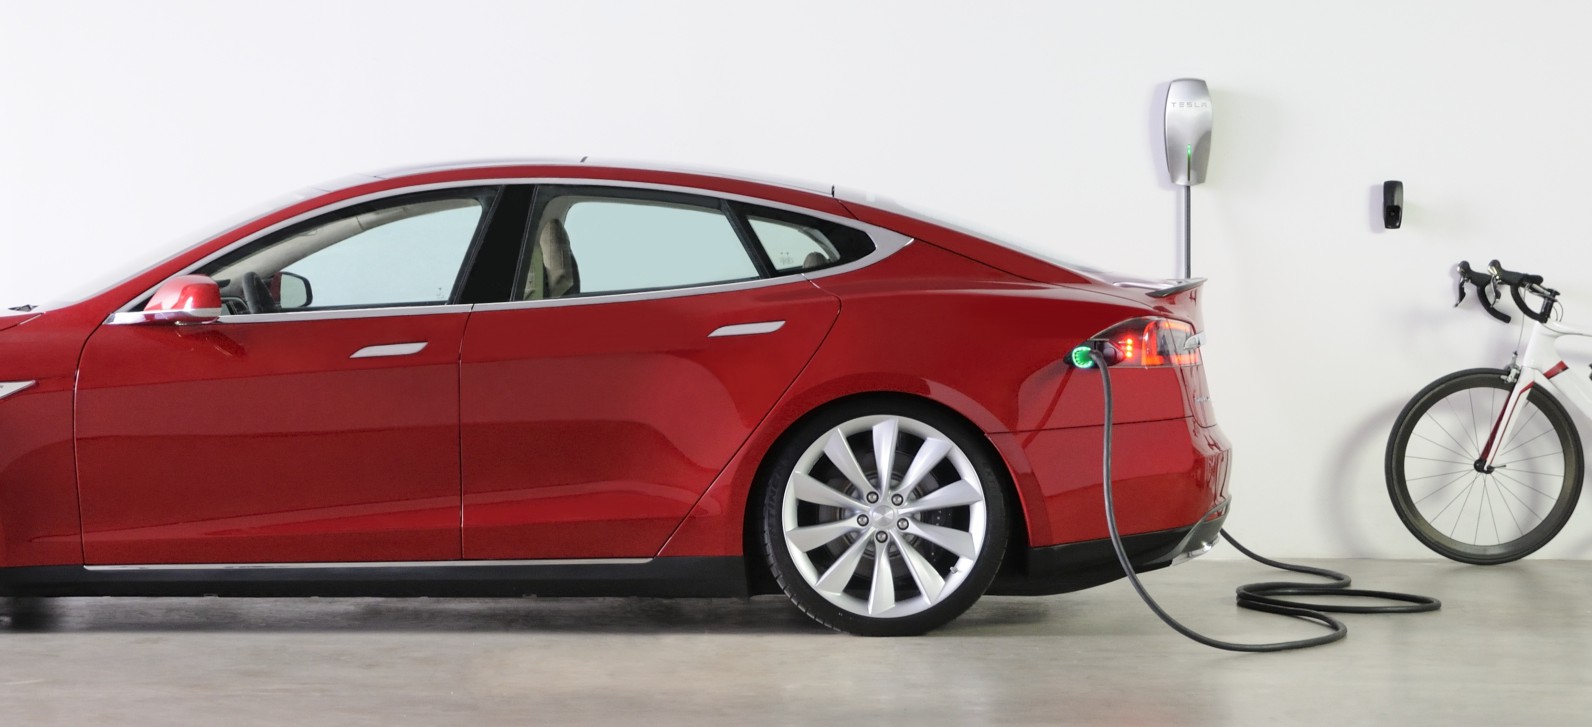 Tesla releases $550 AC charger with standard plug, not Tesla's plug